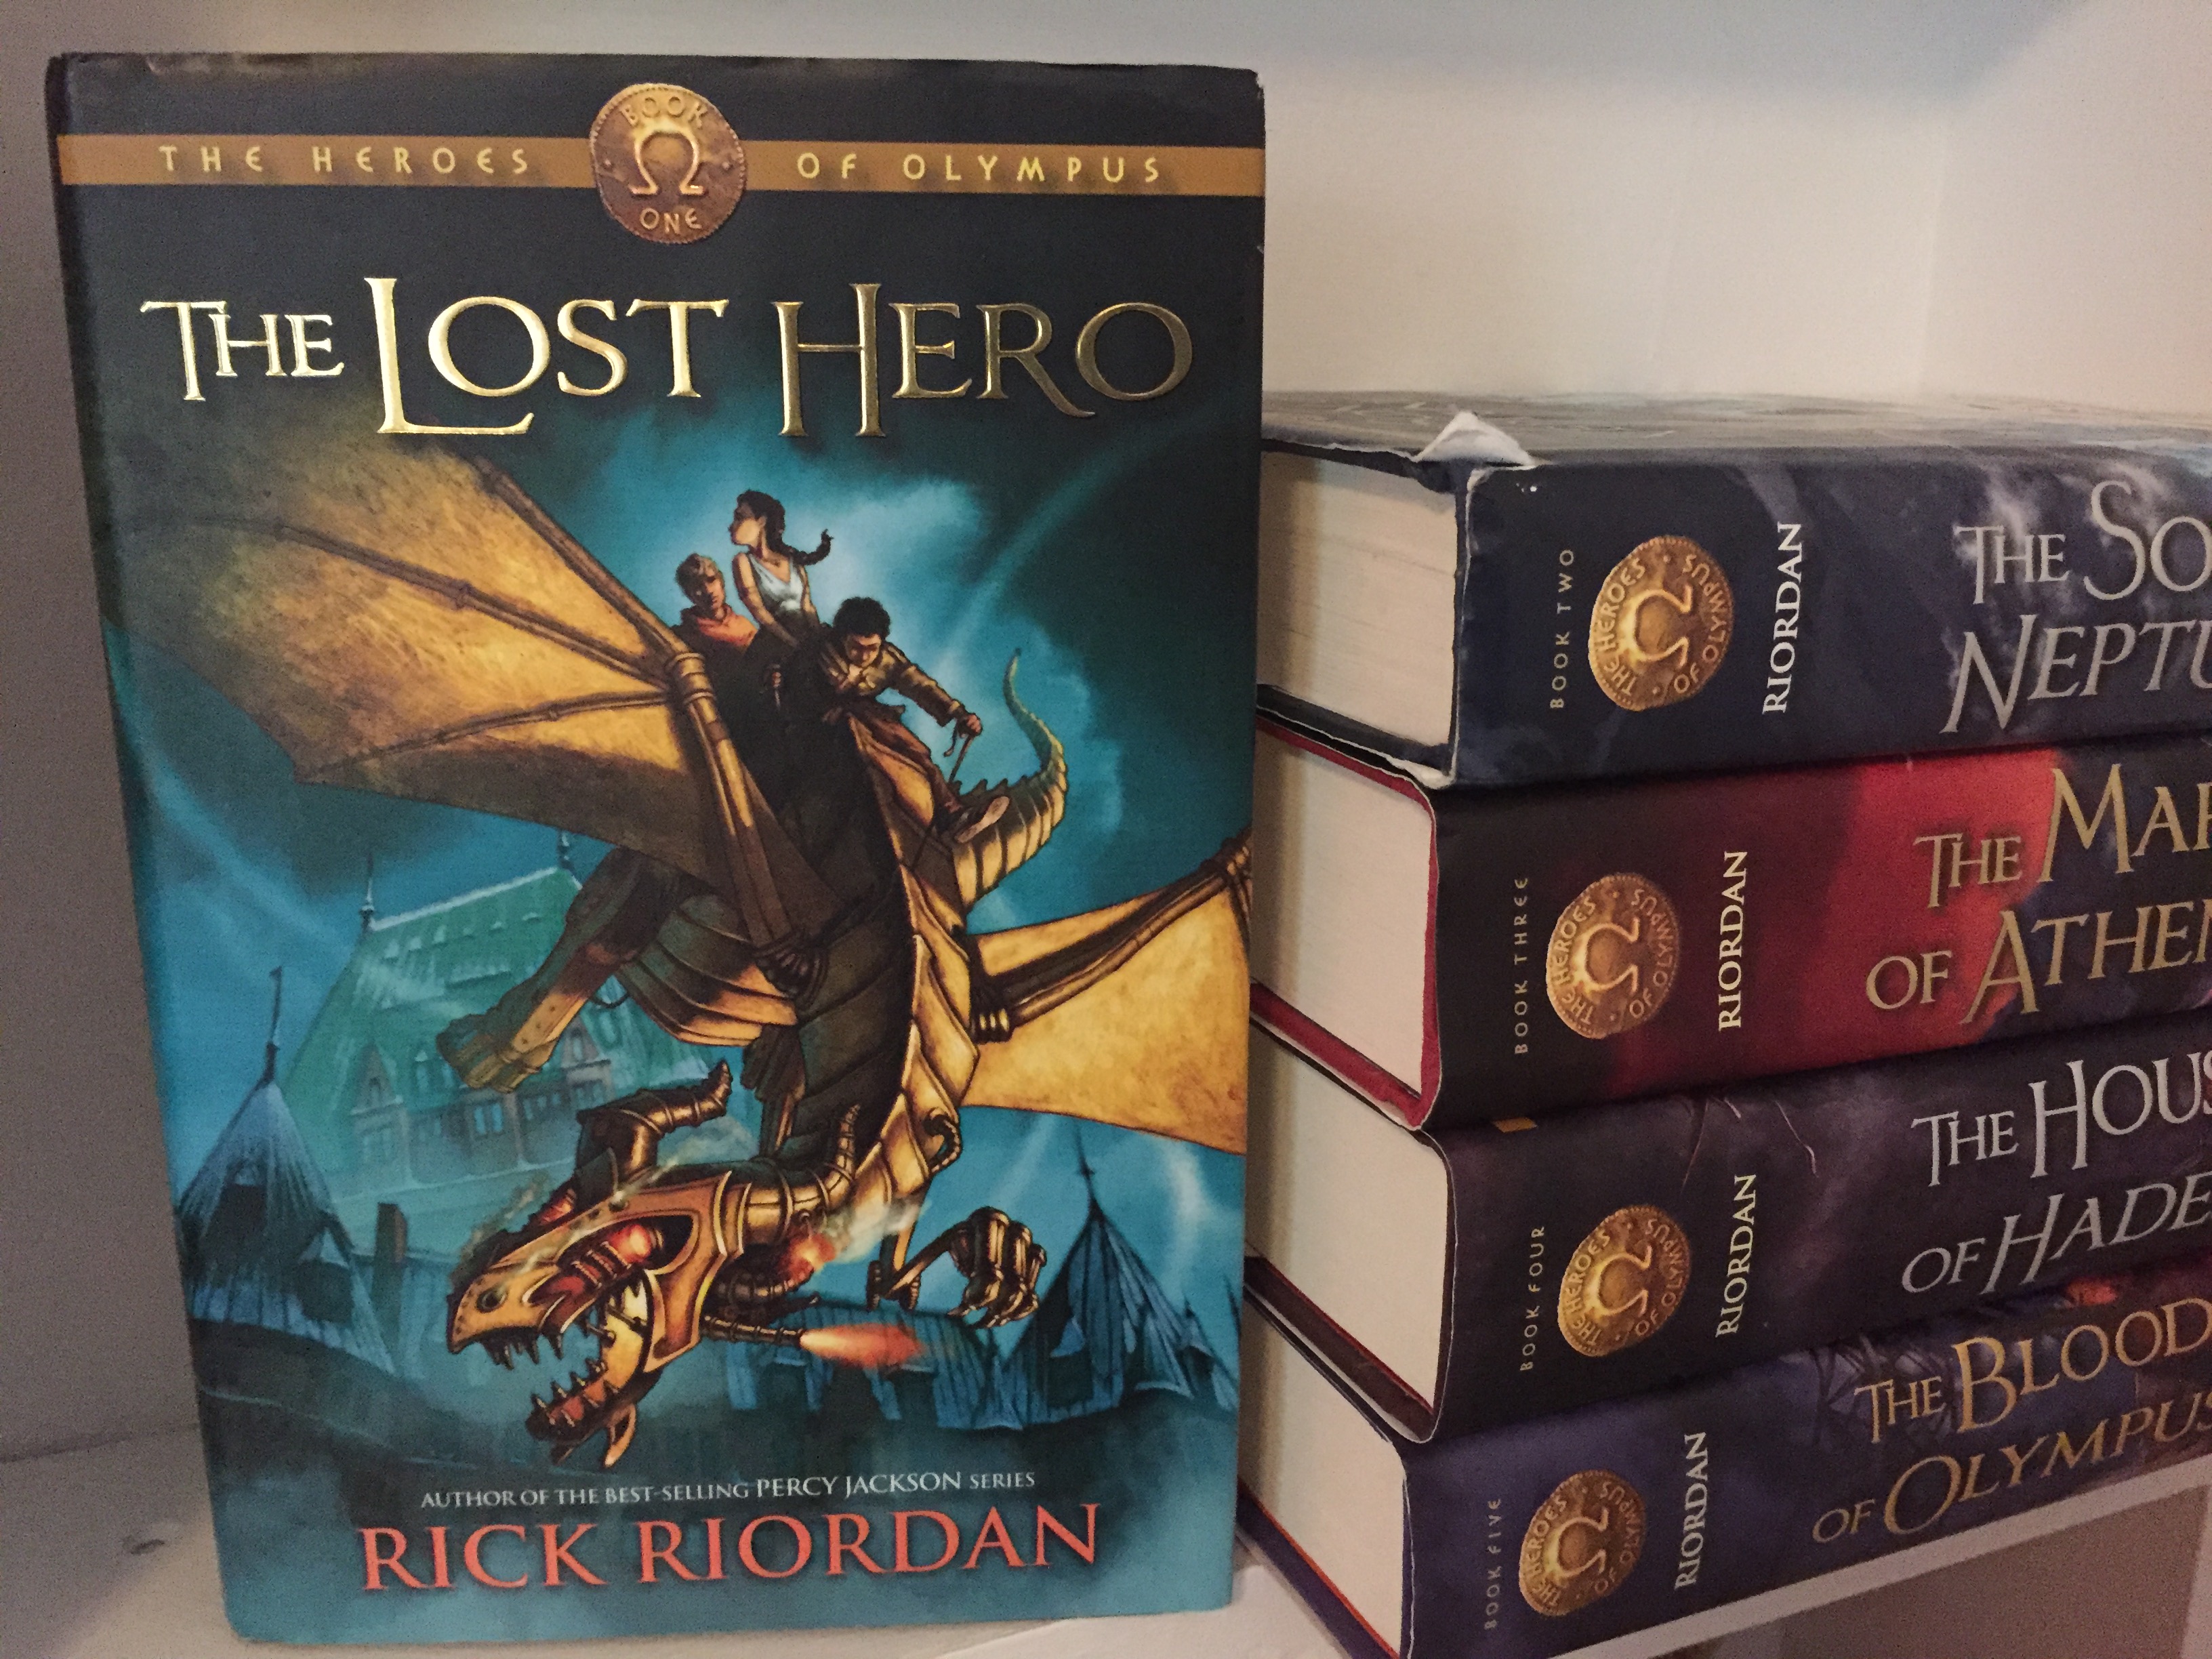 The Lost Hero book. Полное собрание книг Рика Риордана. The Lost Hero read. The lost hero